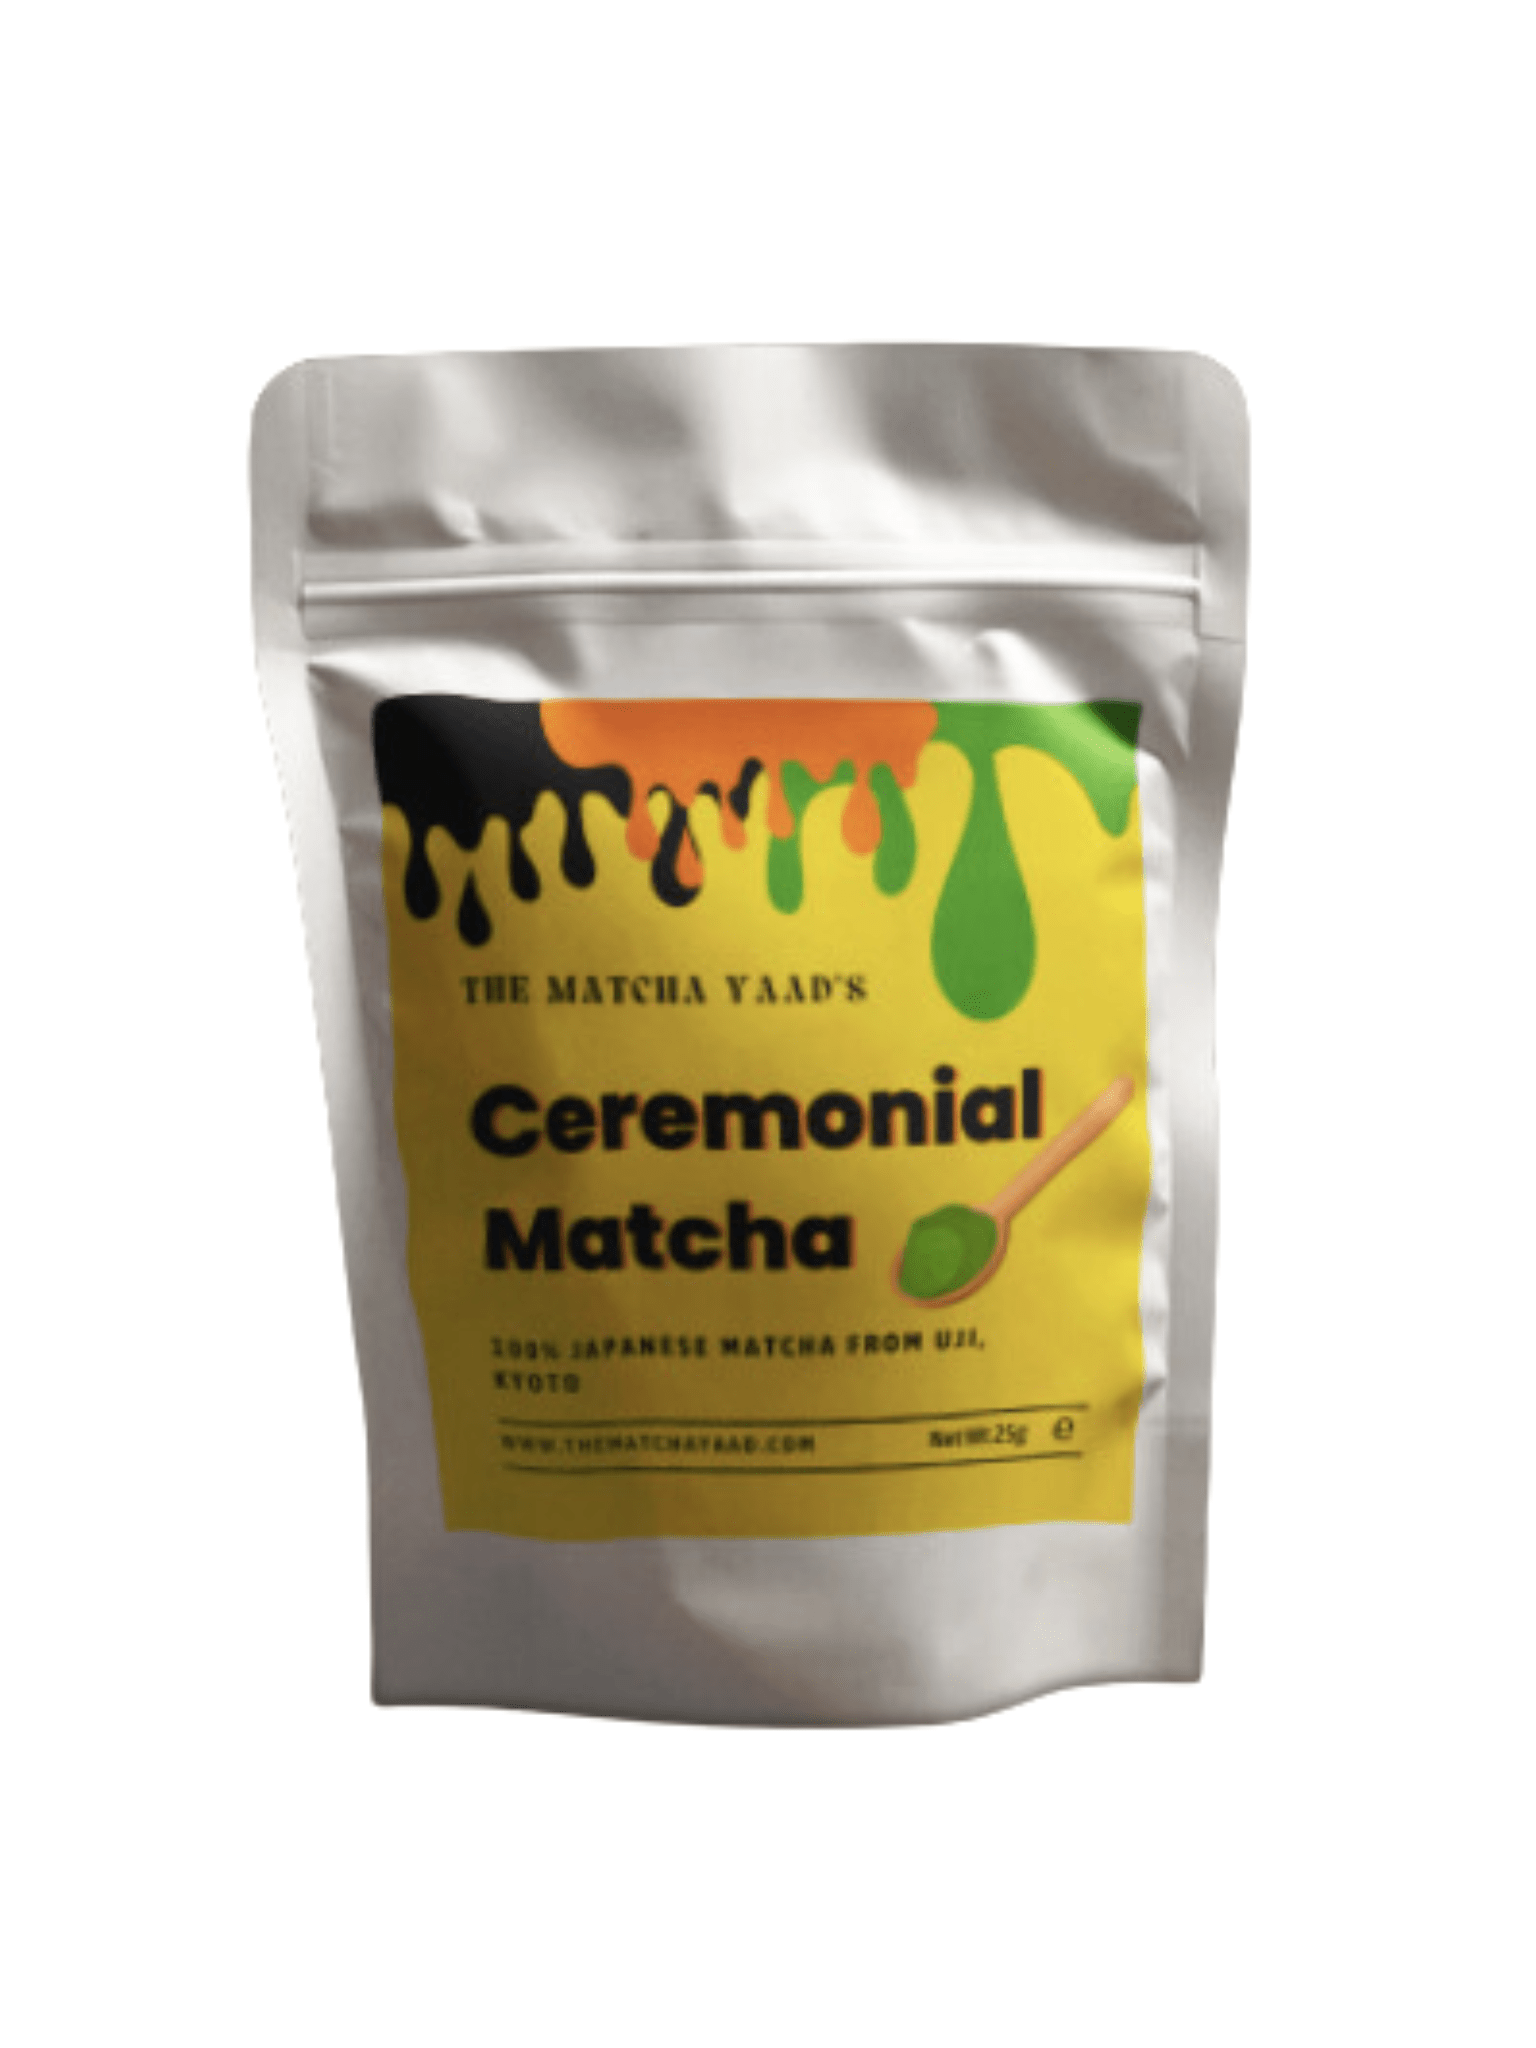 Ceremonial Grade Matcha Matcha Powder thematchayaad 